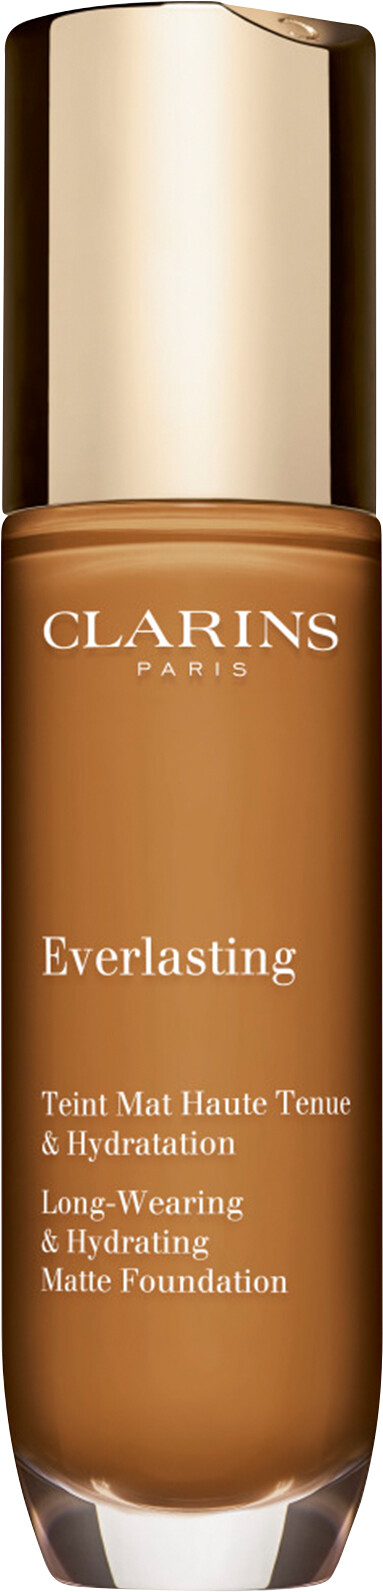 Clarins Everlasting Long-Wearing & Hydrating Matte Foundation 30ml 118N - Sienna